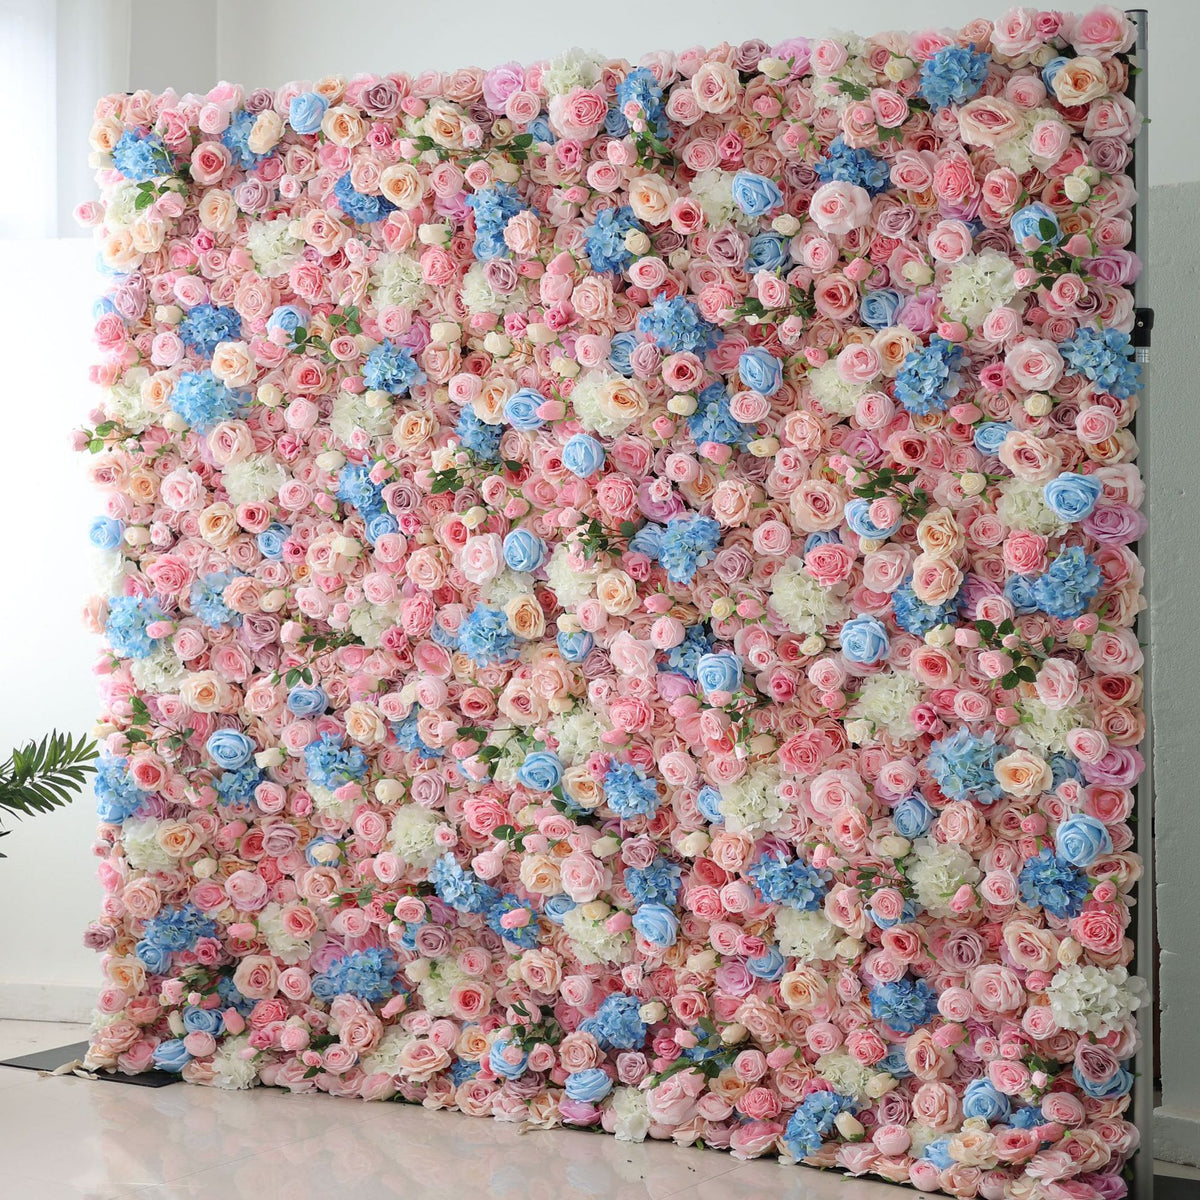 3D Artificial Flower Wall Arrangement Wedding Party Birthday Backdrop Decor HQ1191